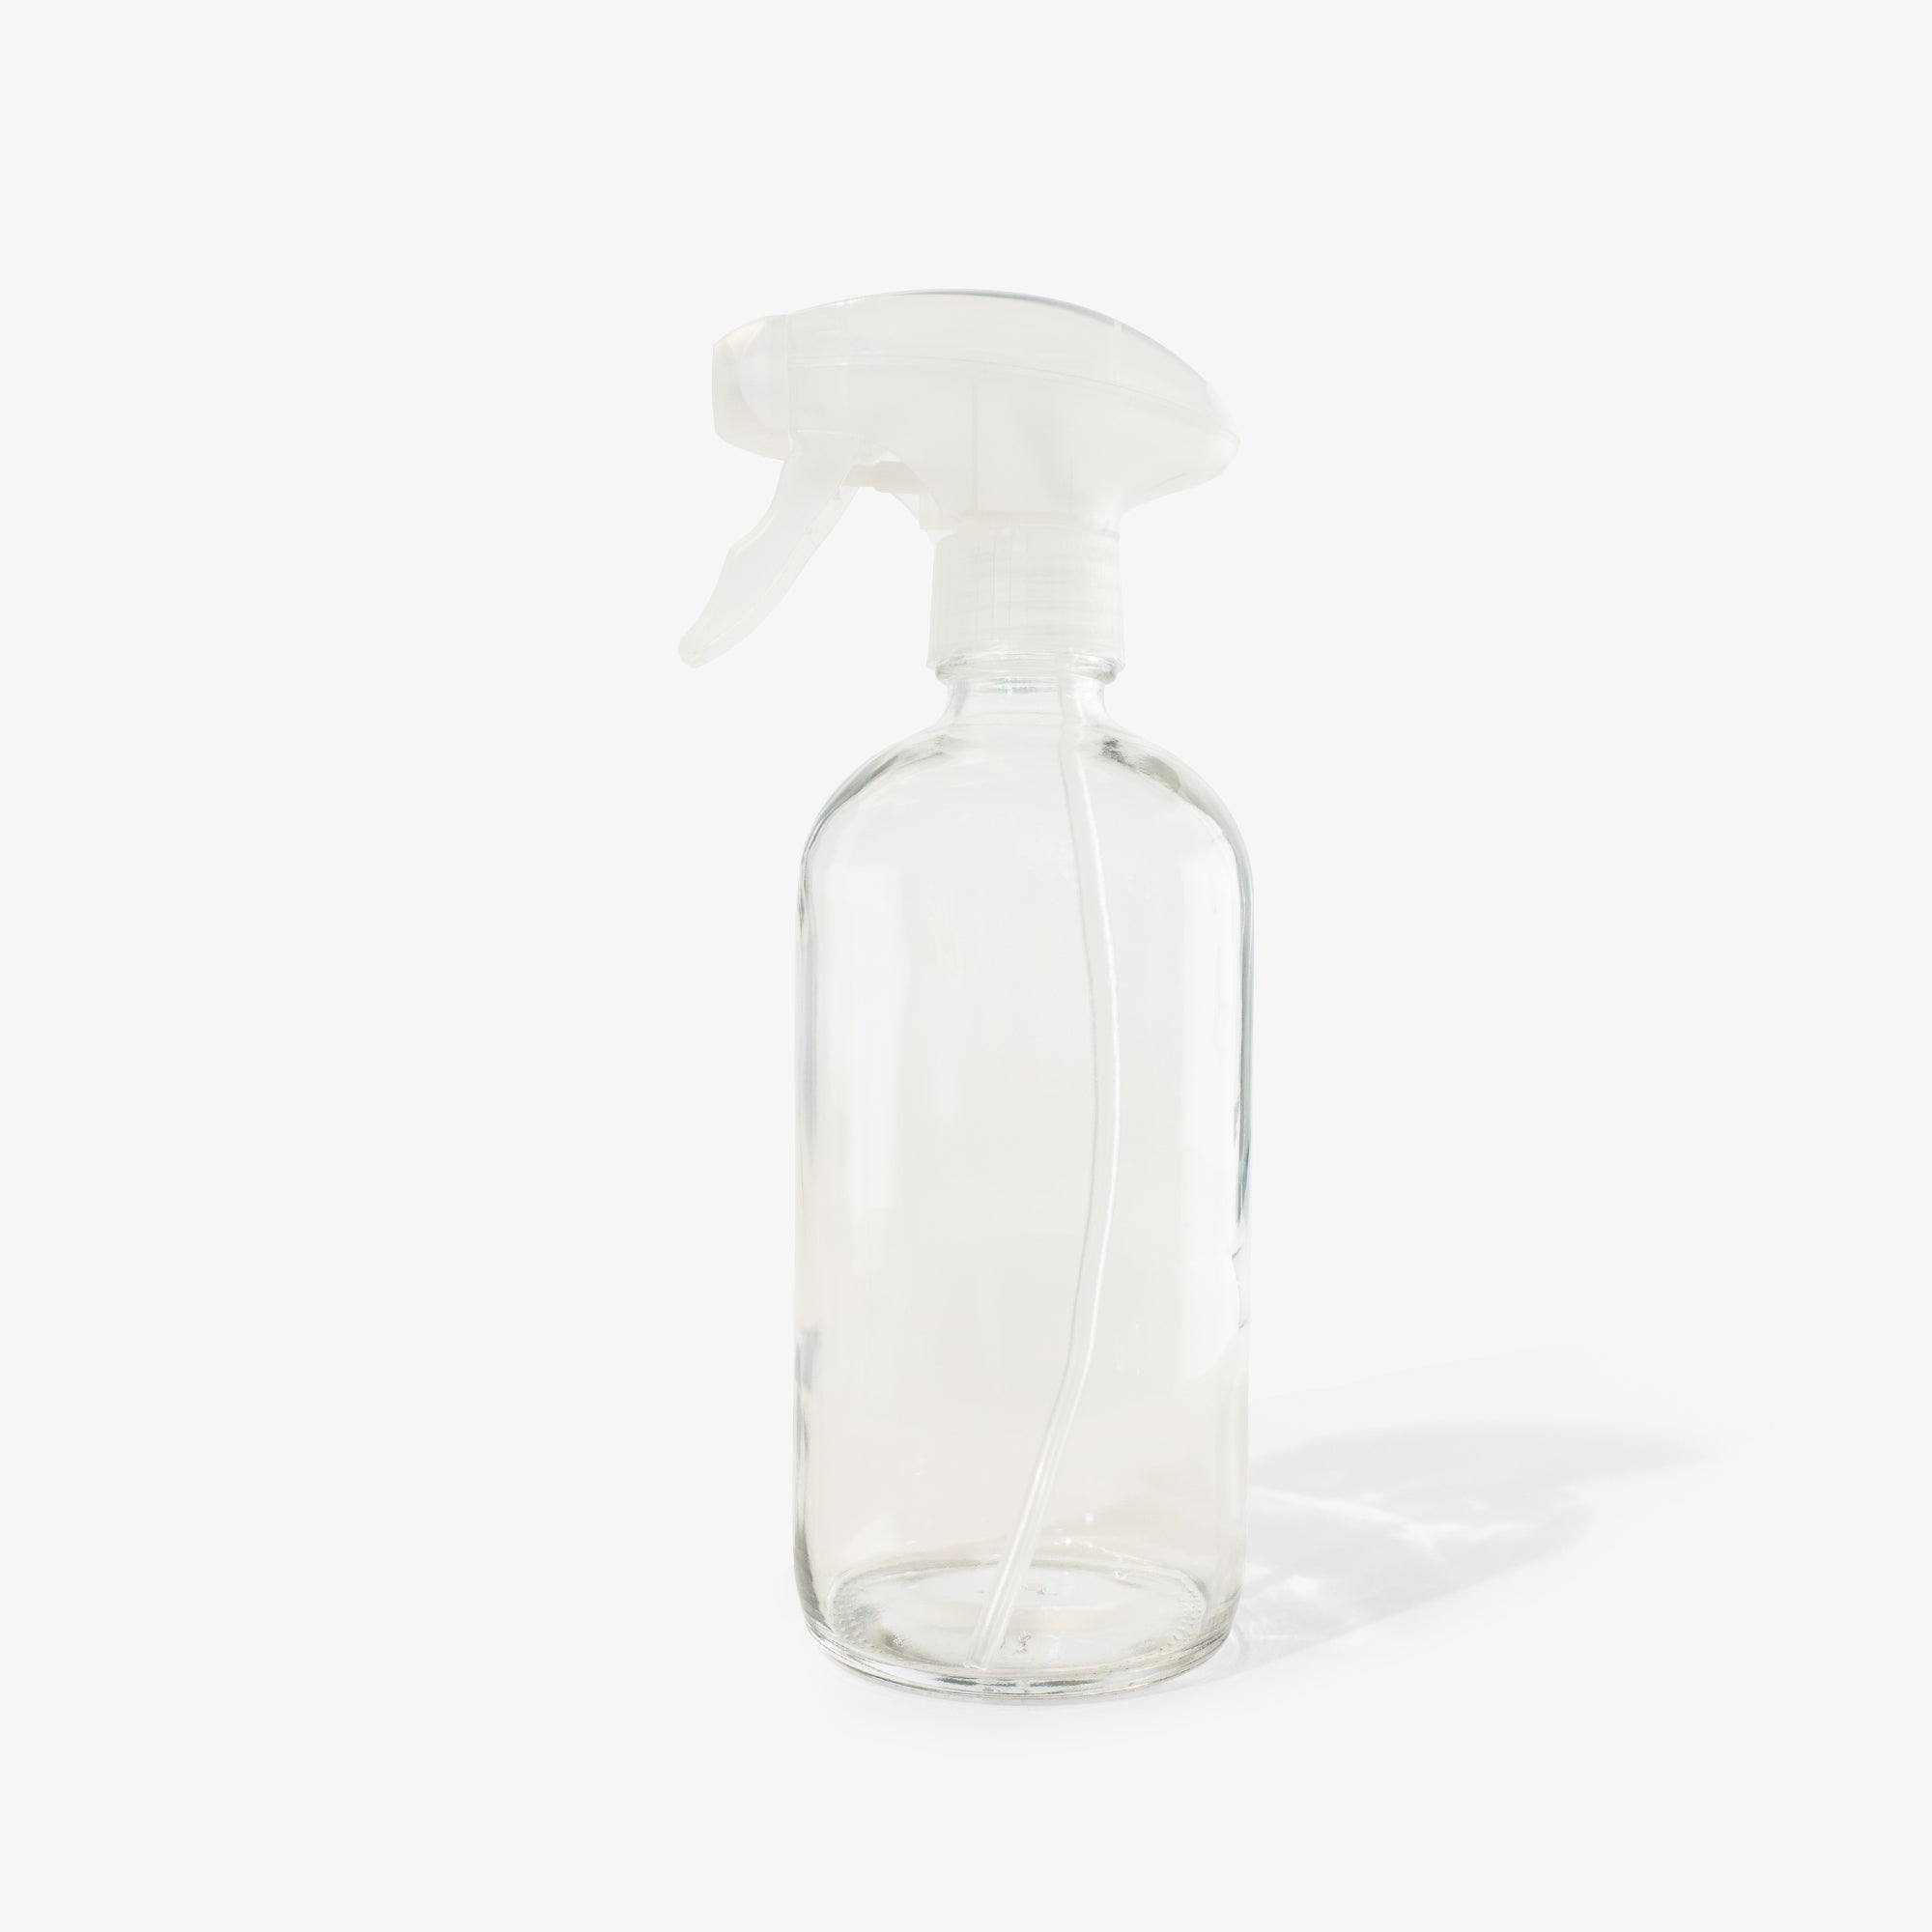 spray-glass-bottle-with-black-pump-zero-waste-reusable-flint-glass-bottle-16oz-with-clear-trigger-sprayer